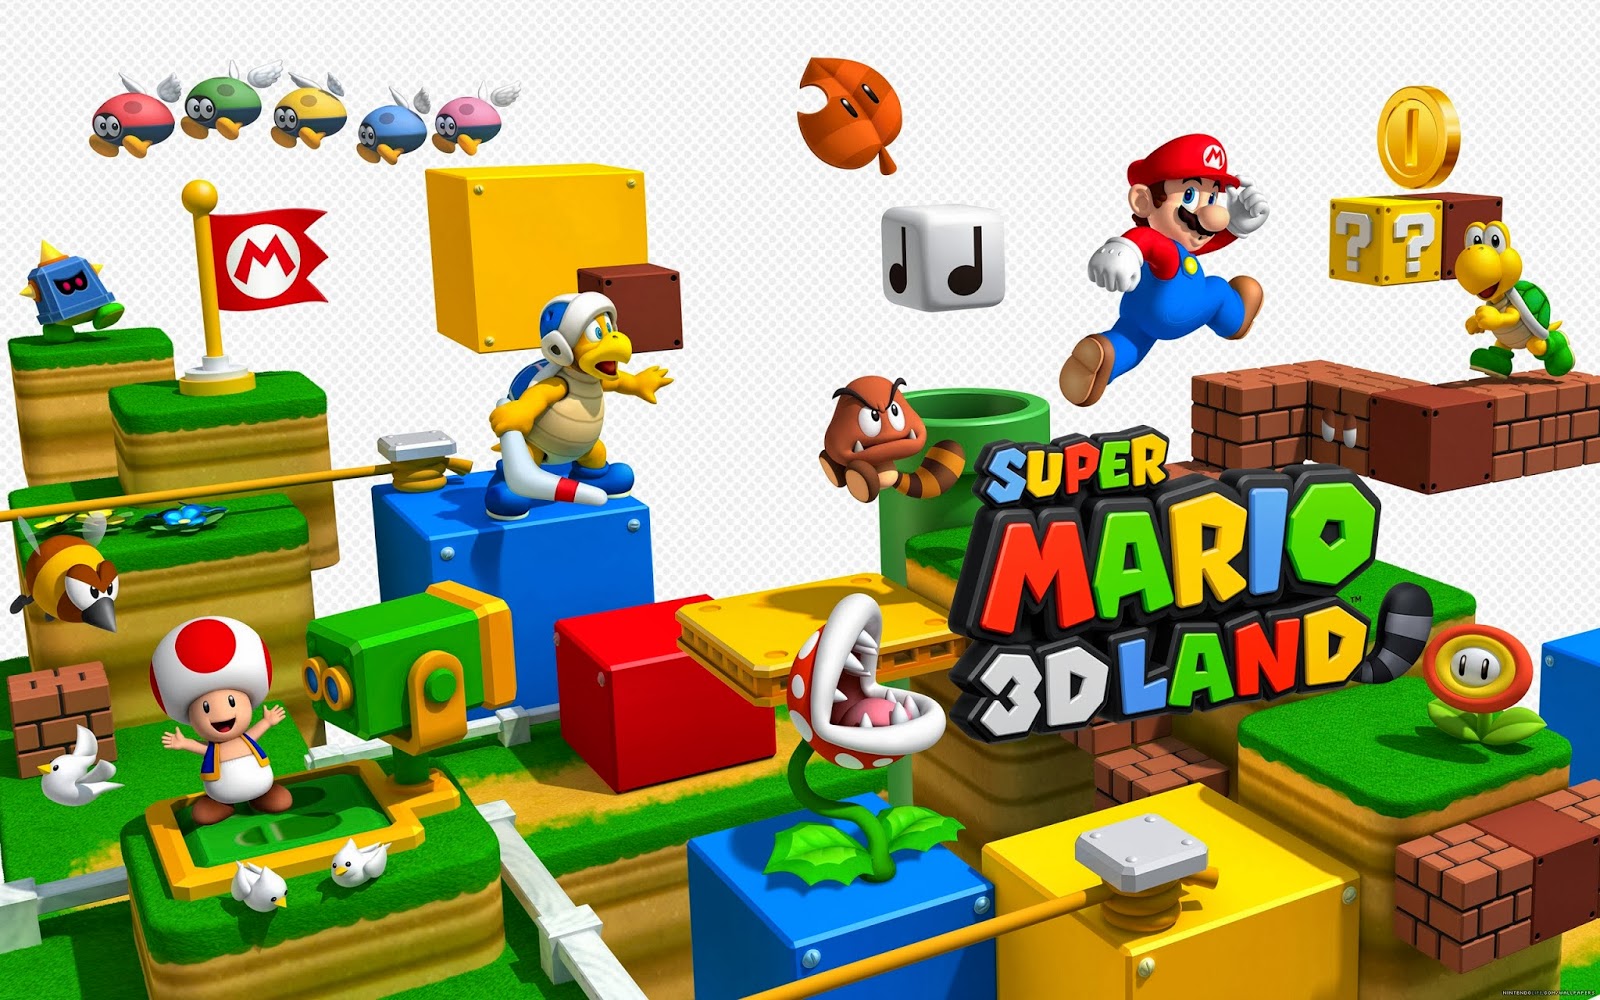 Top 10 WORST Super Mario Games 